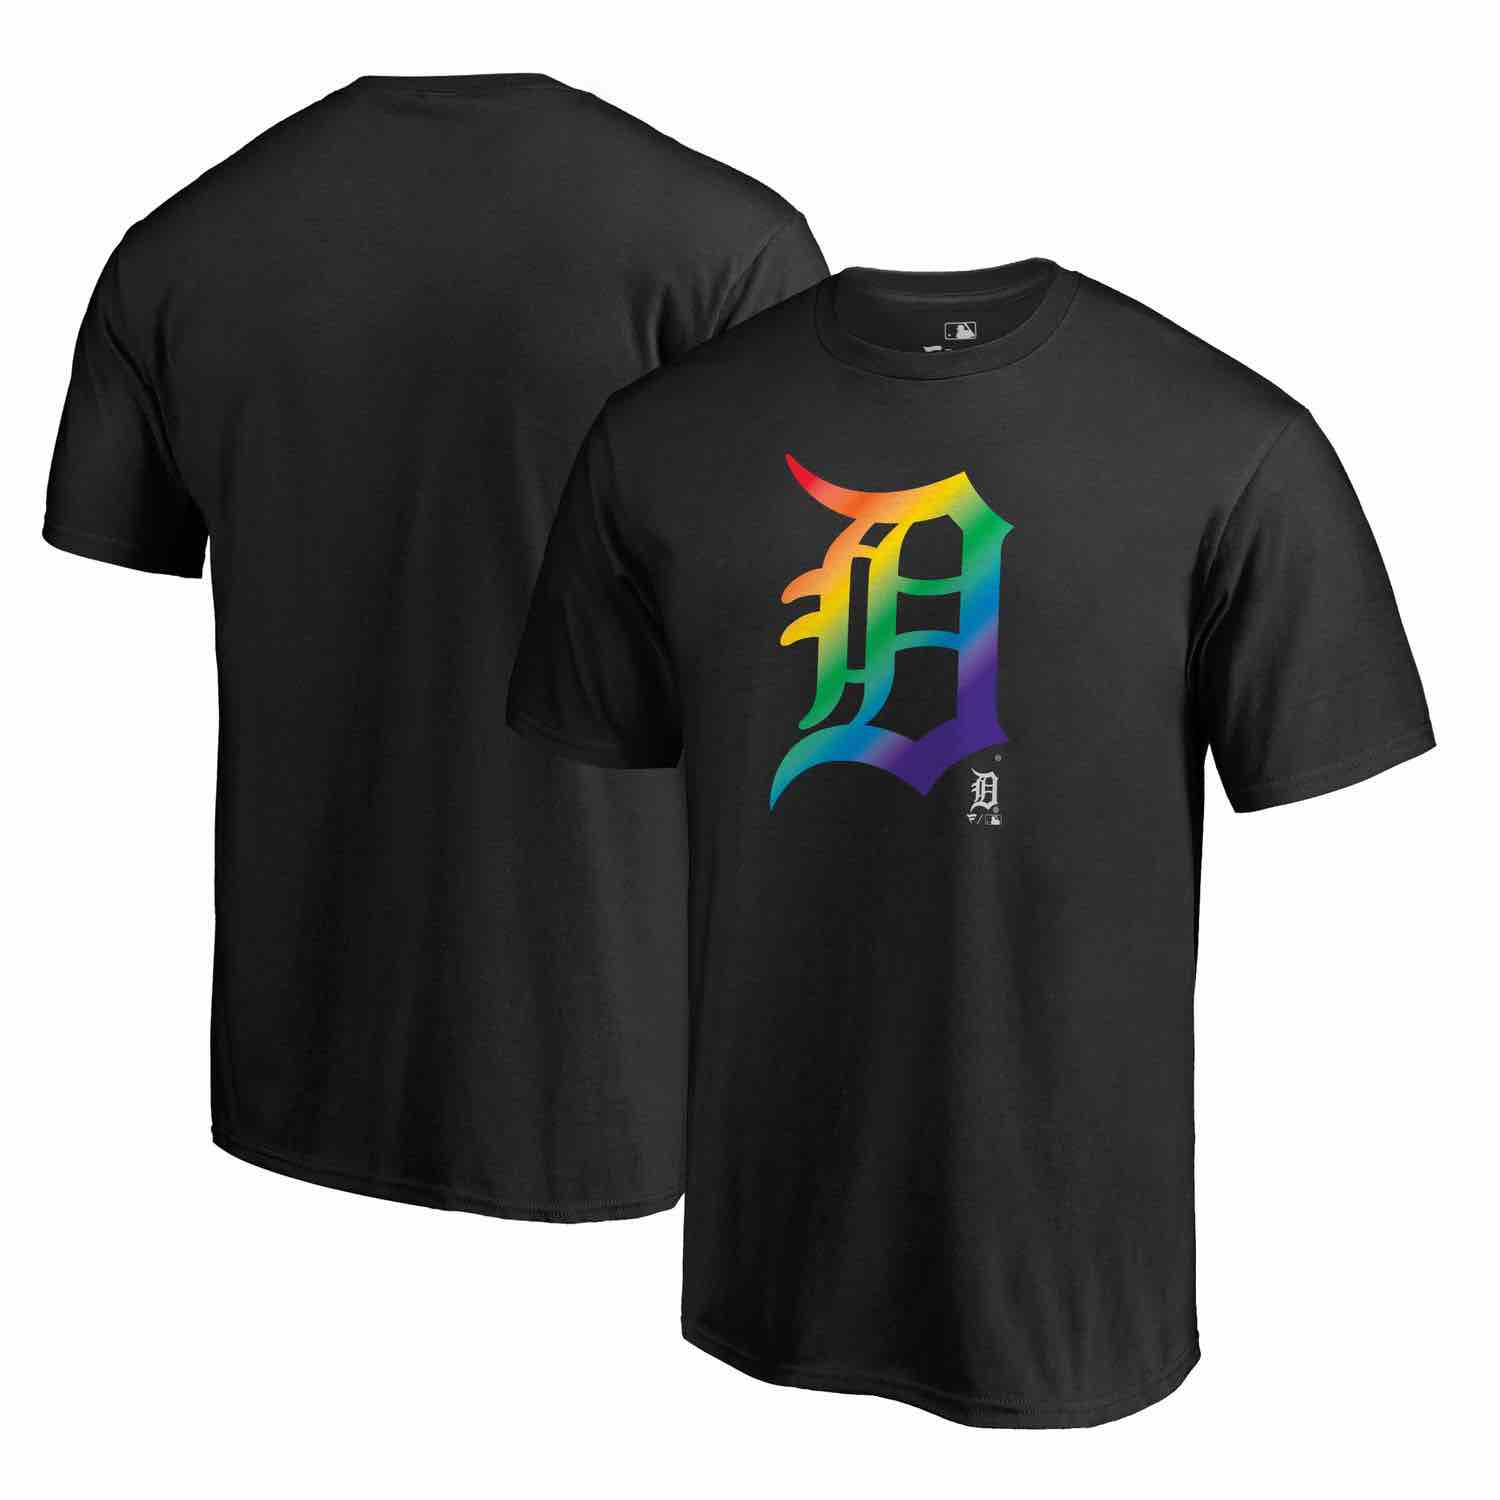 Mens Detroit Tigers Fanatics Branded Black Big & Tall Pride T-Shirt